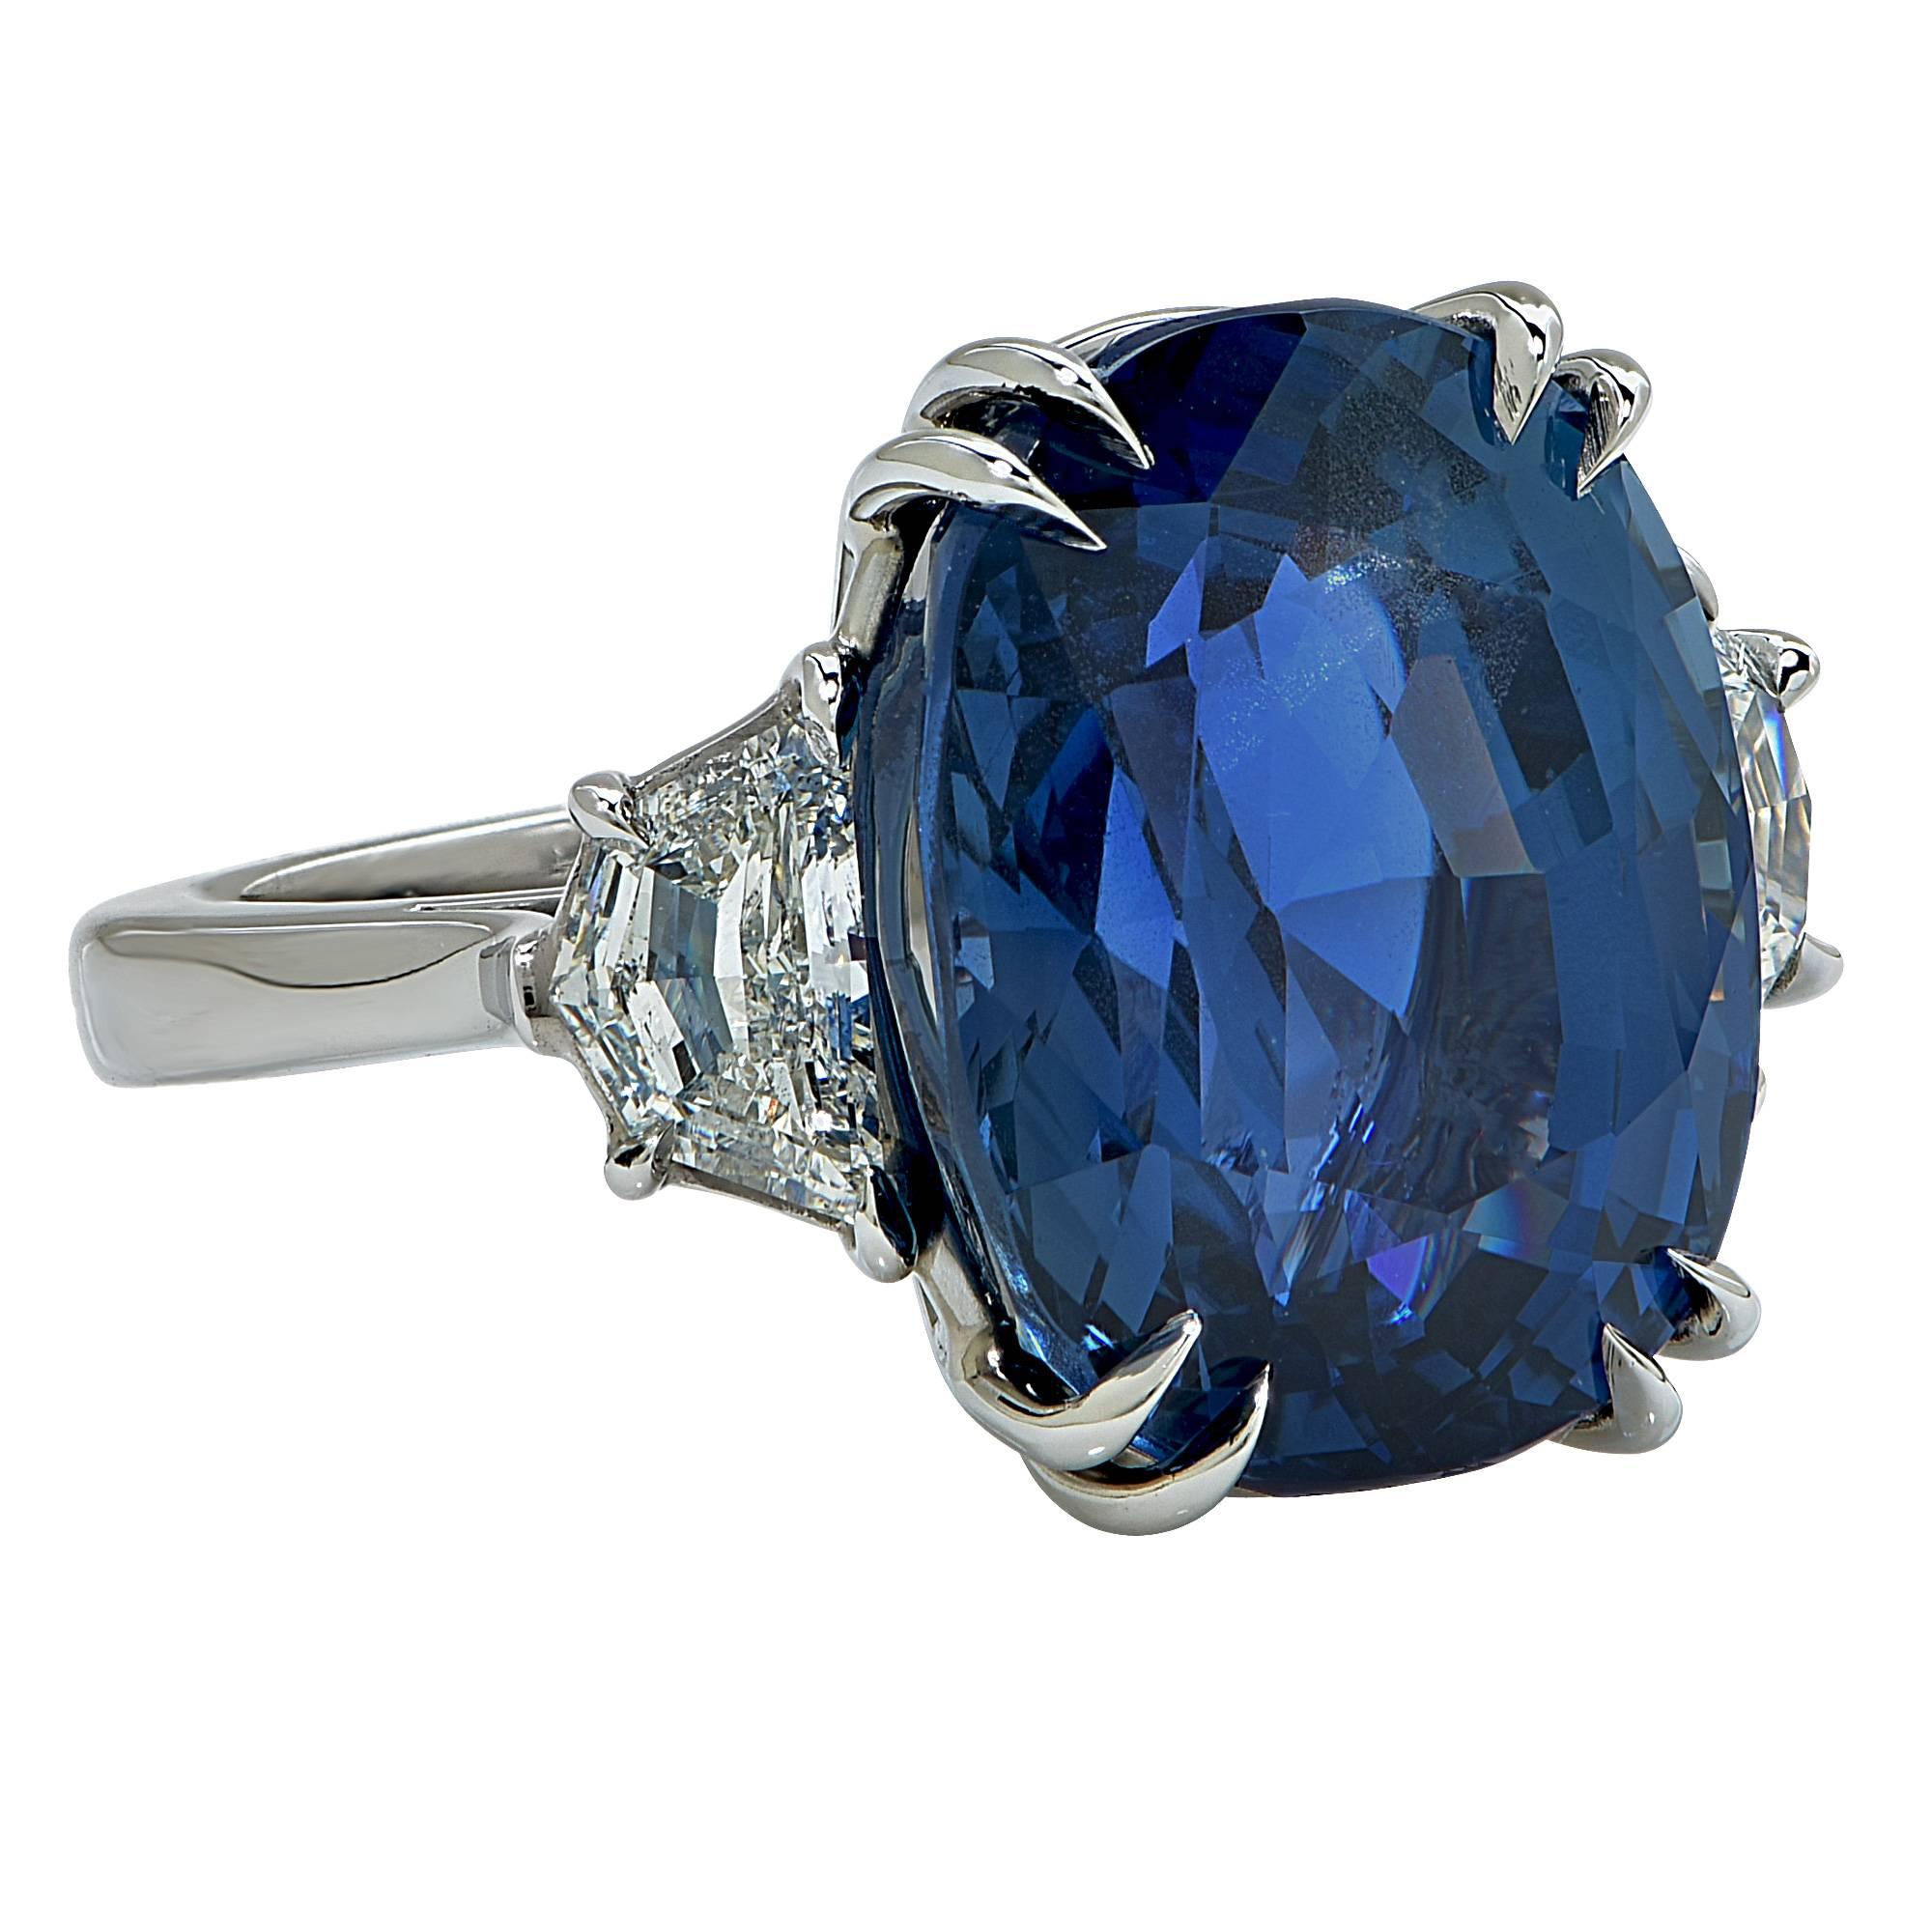 Modern Important 20.42 Carat AGL Graded Unheated Burma Sapphire Diamond Ring